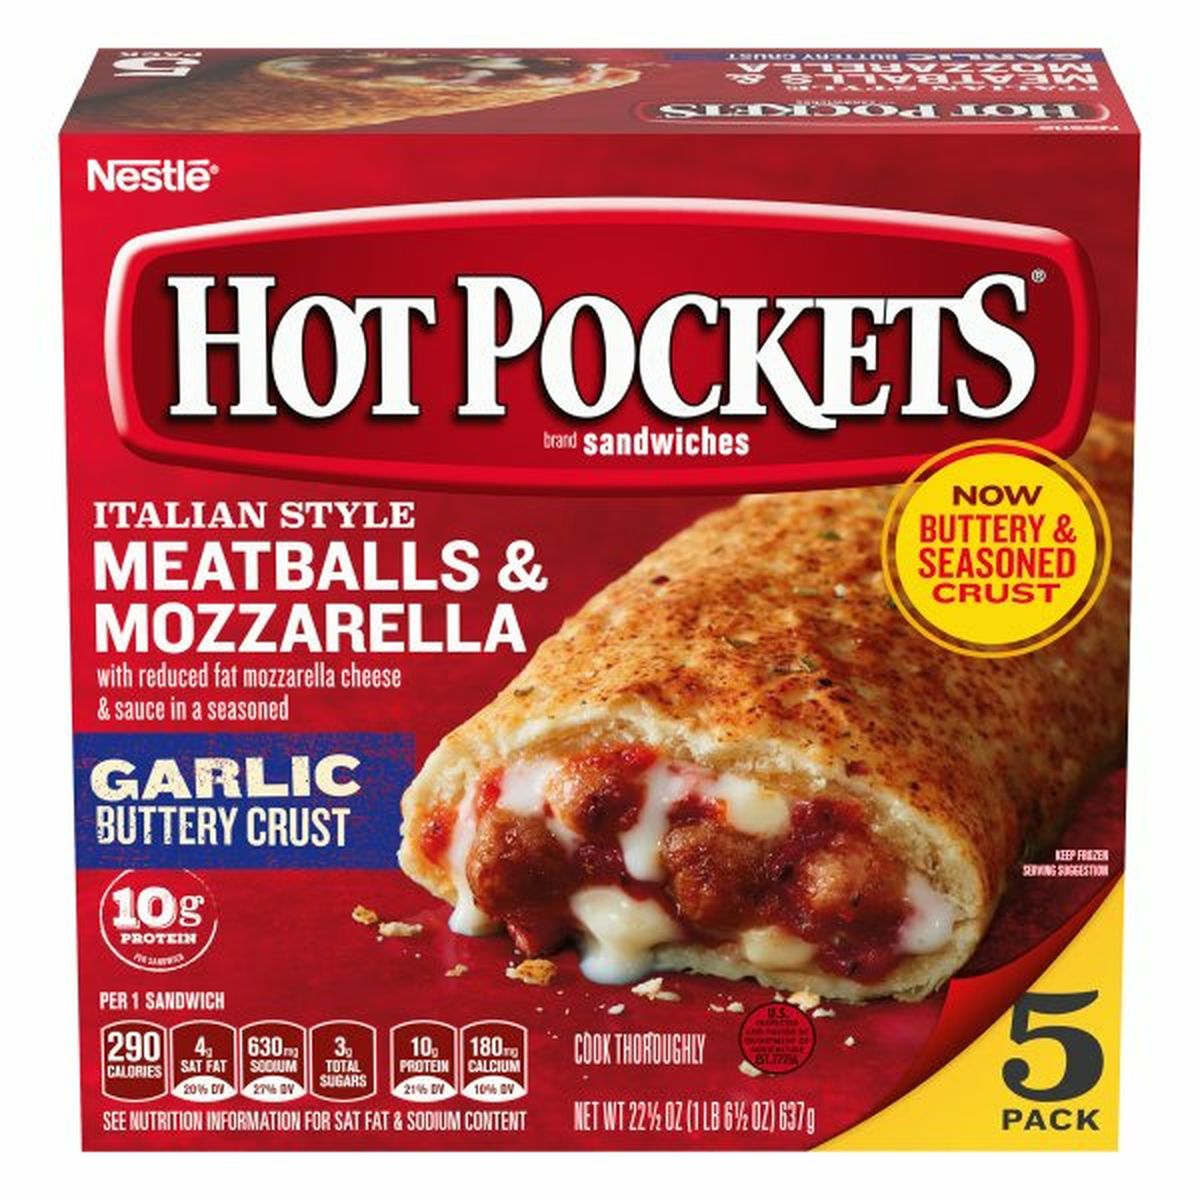 Calories in Hot Pockets Sandwiches, Italian Style Meatballs & Mozzarella, Garlic Buttery Crust, 5 Pack